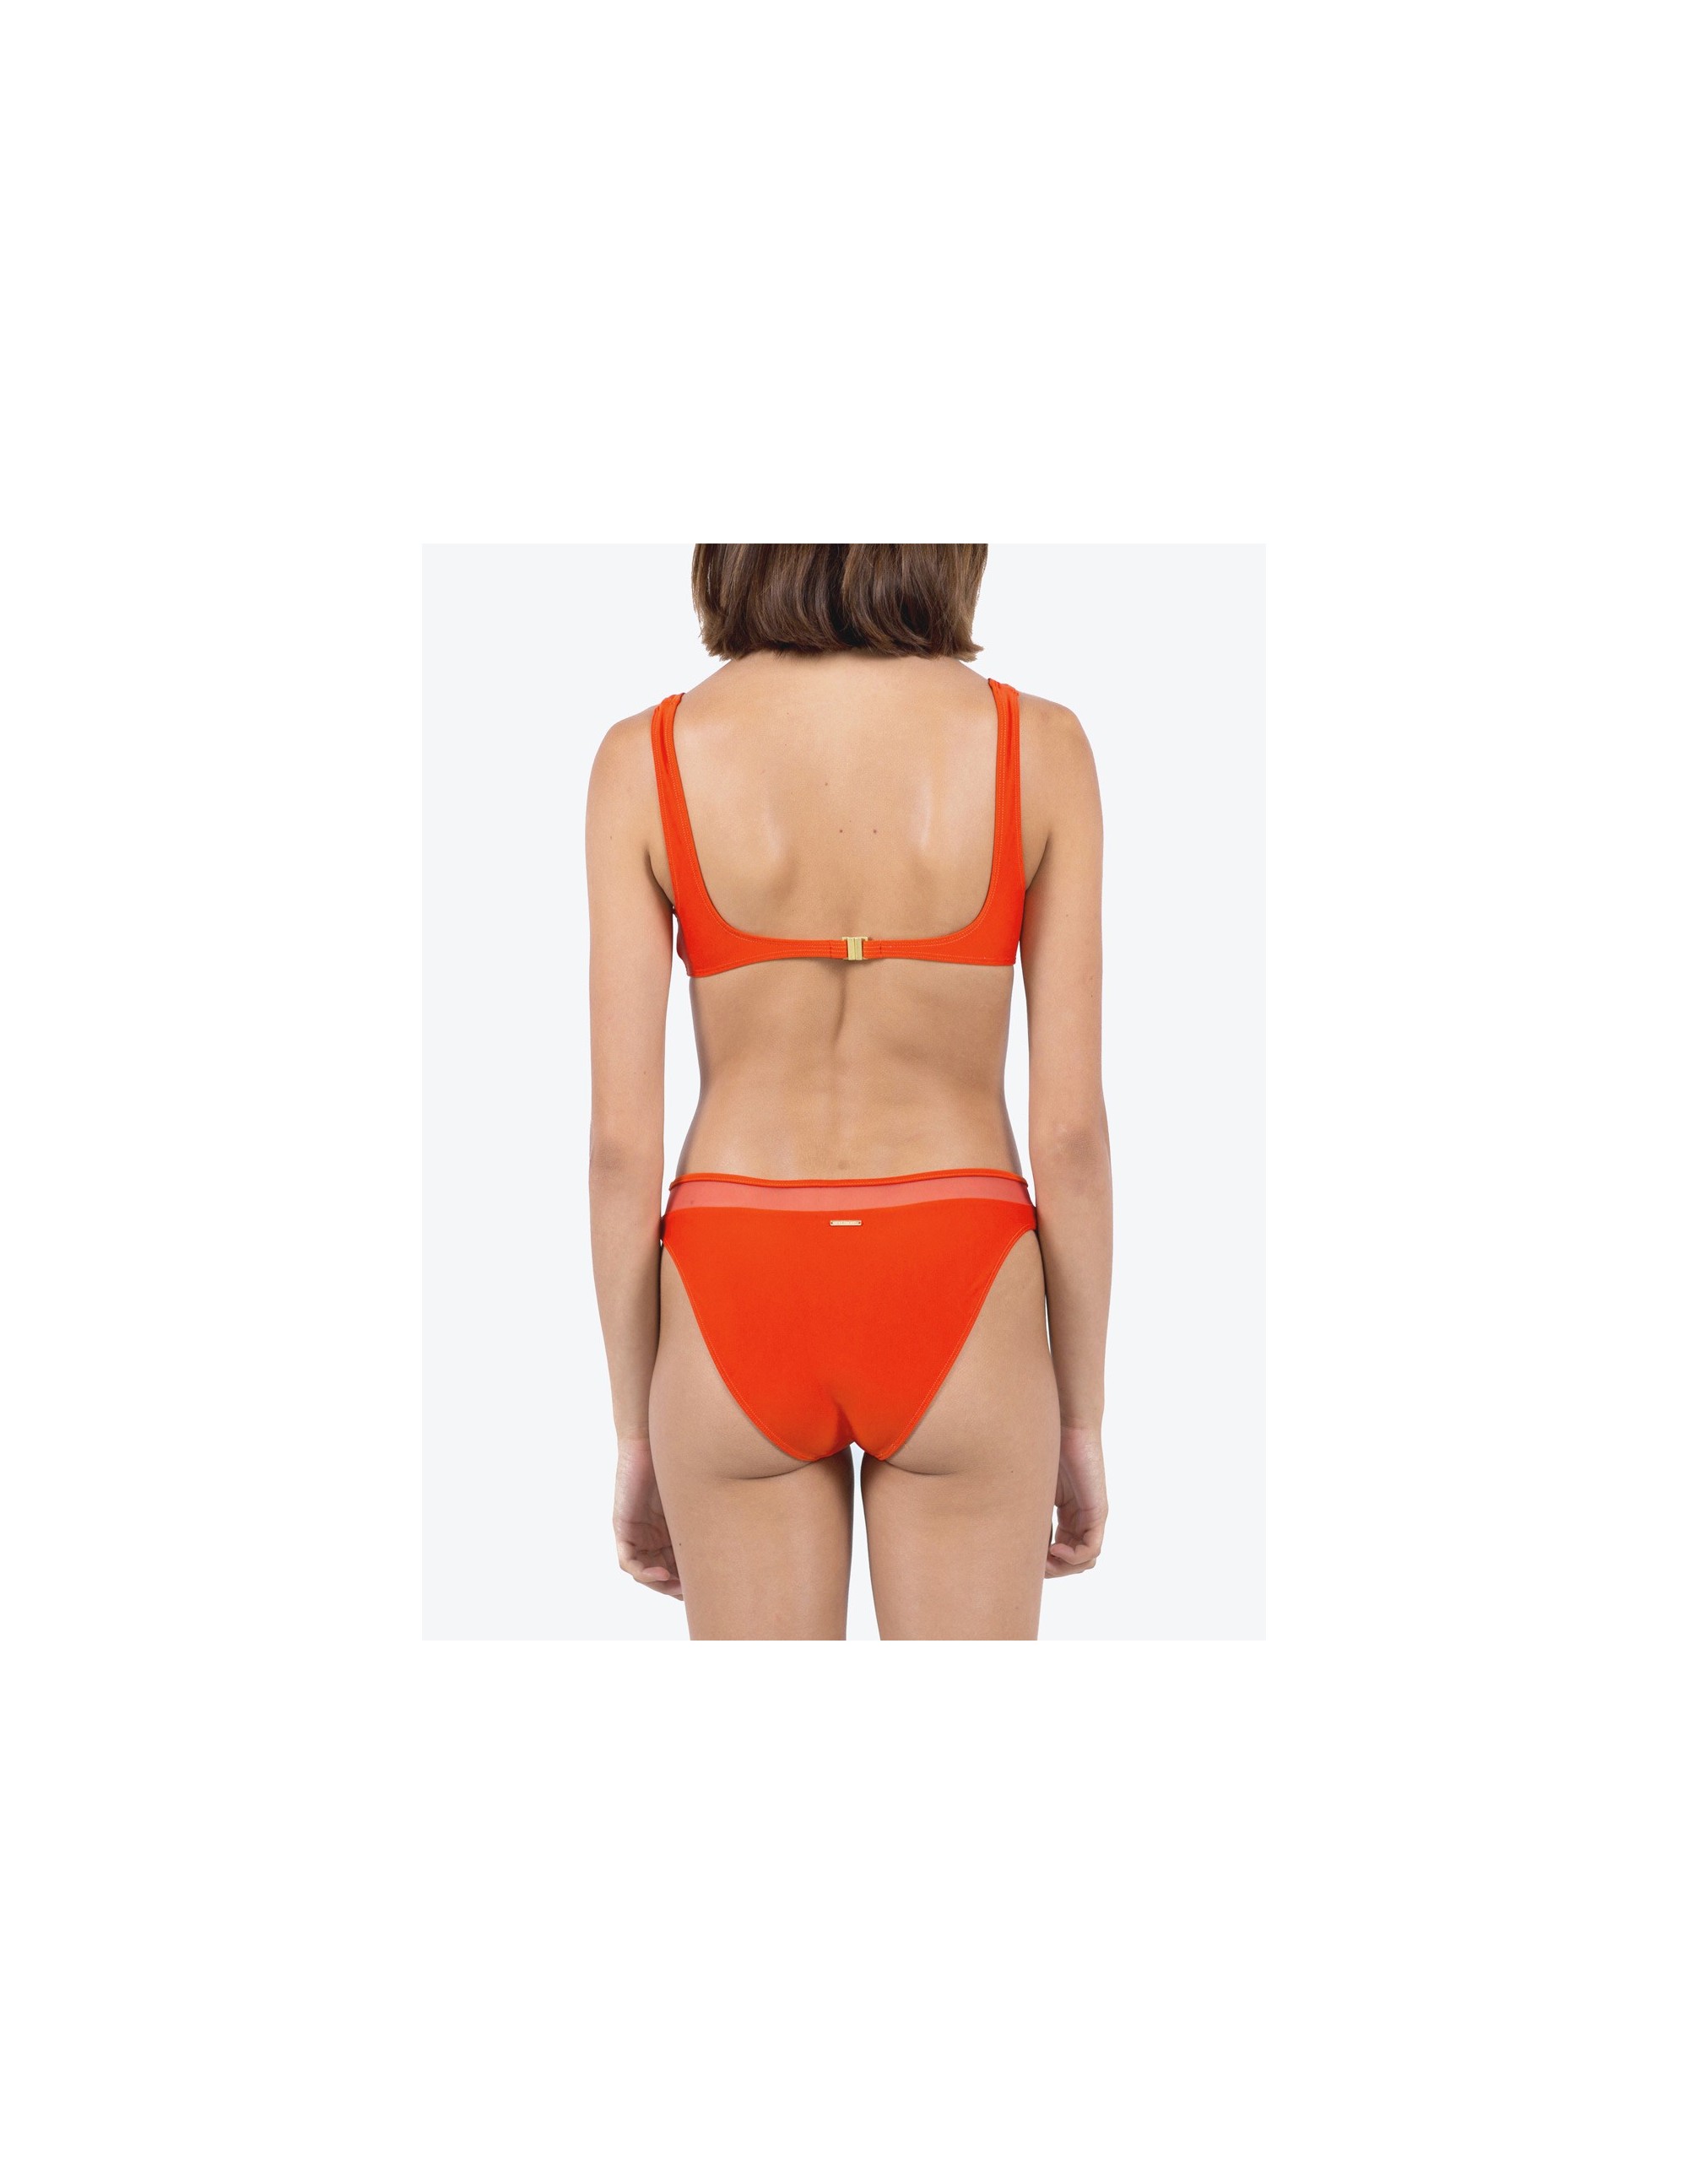 VIK bikini top - CHARACTER RED